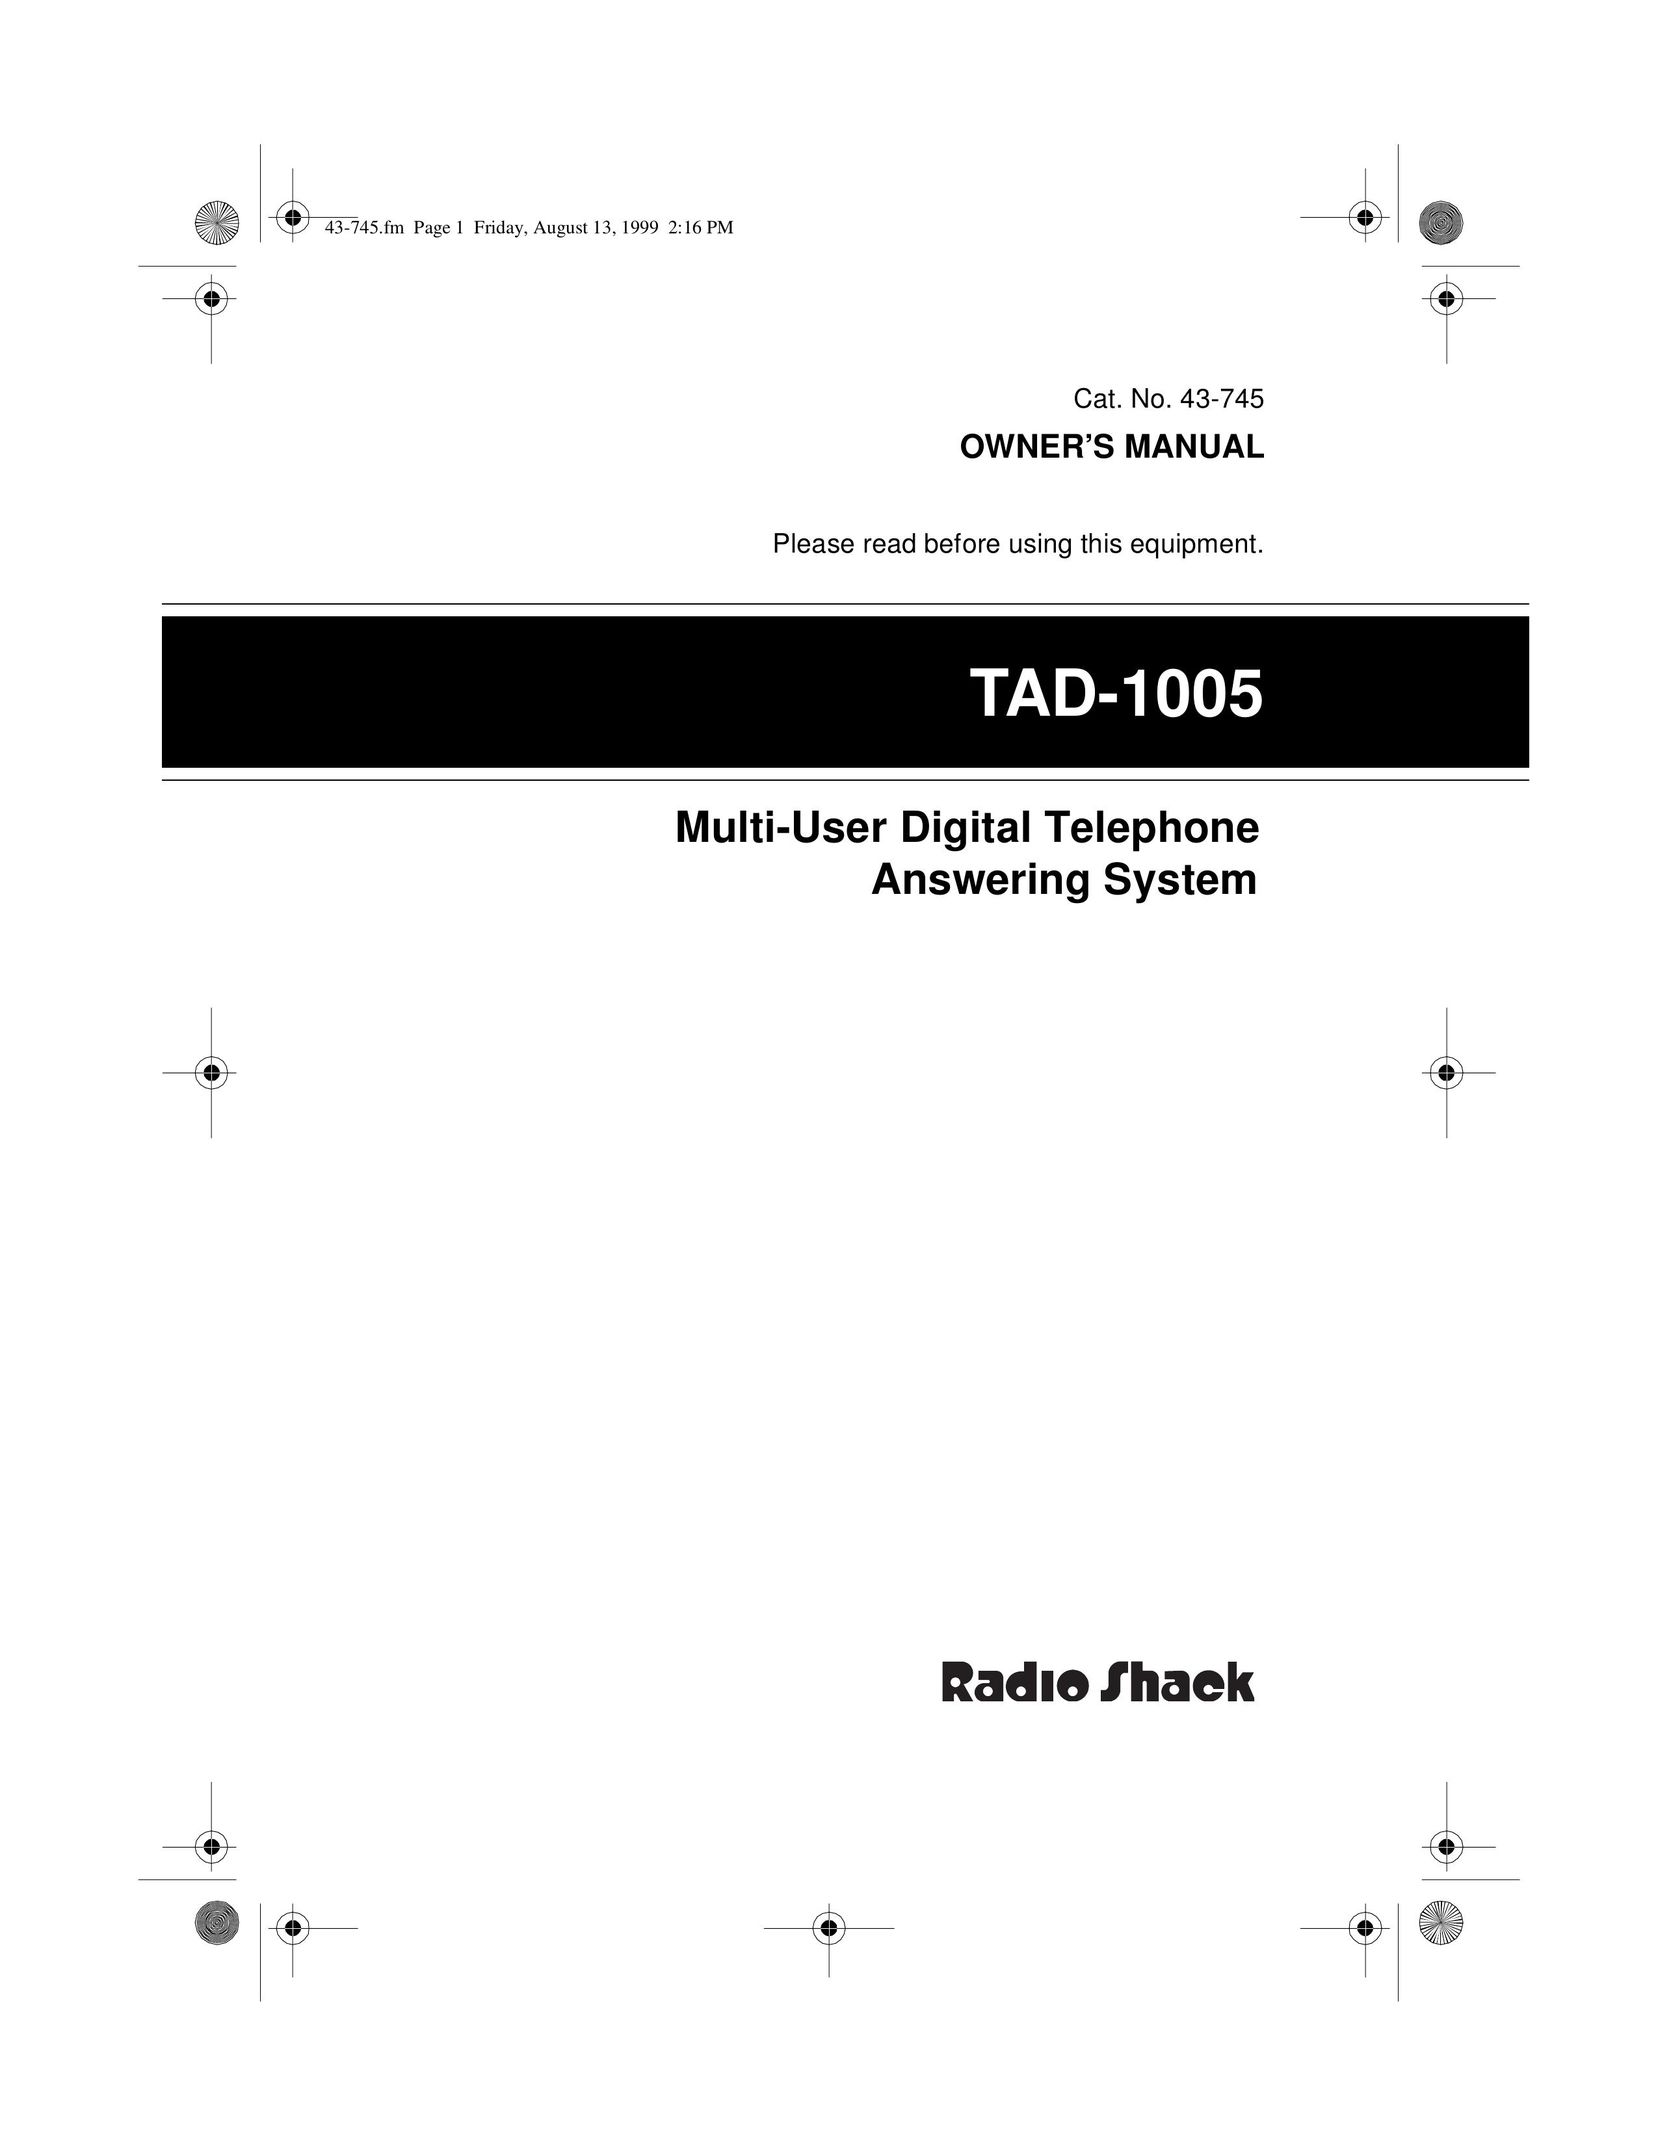 Radio Shack TAD-1005 Answering Machine User Manual